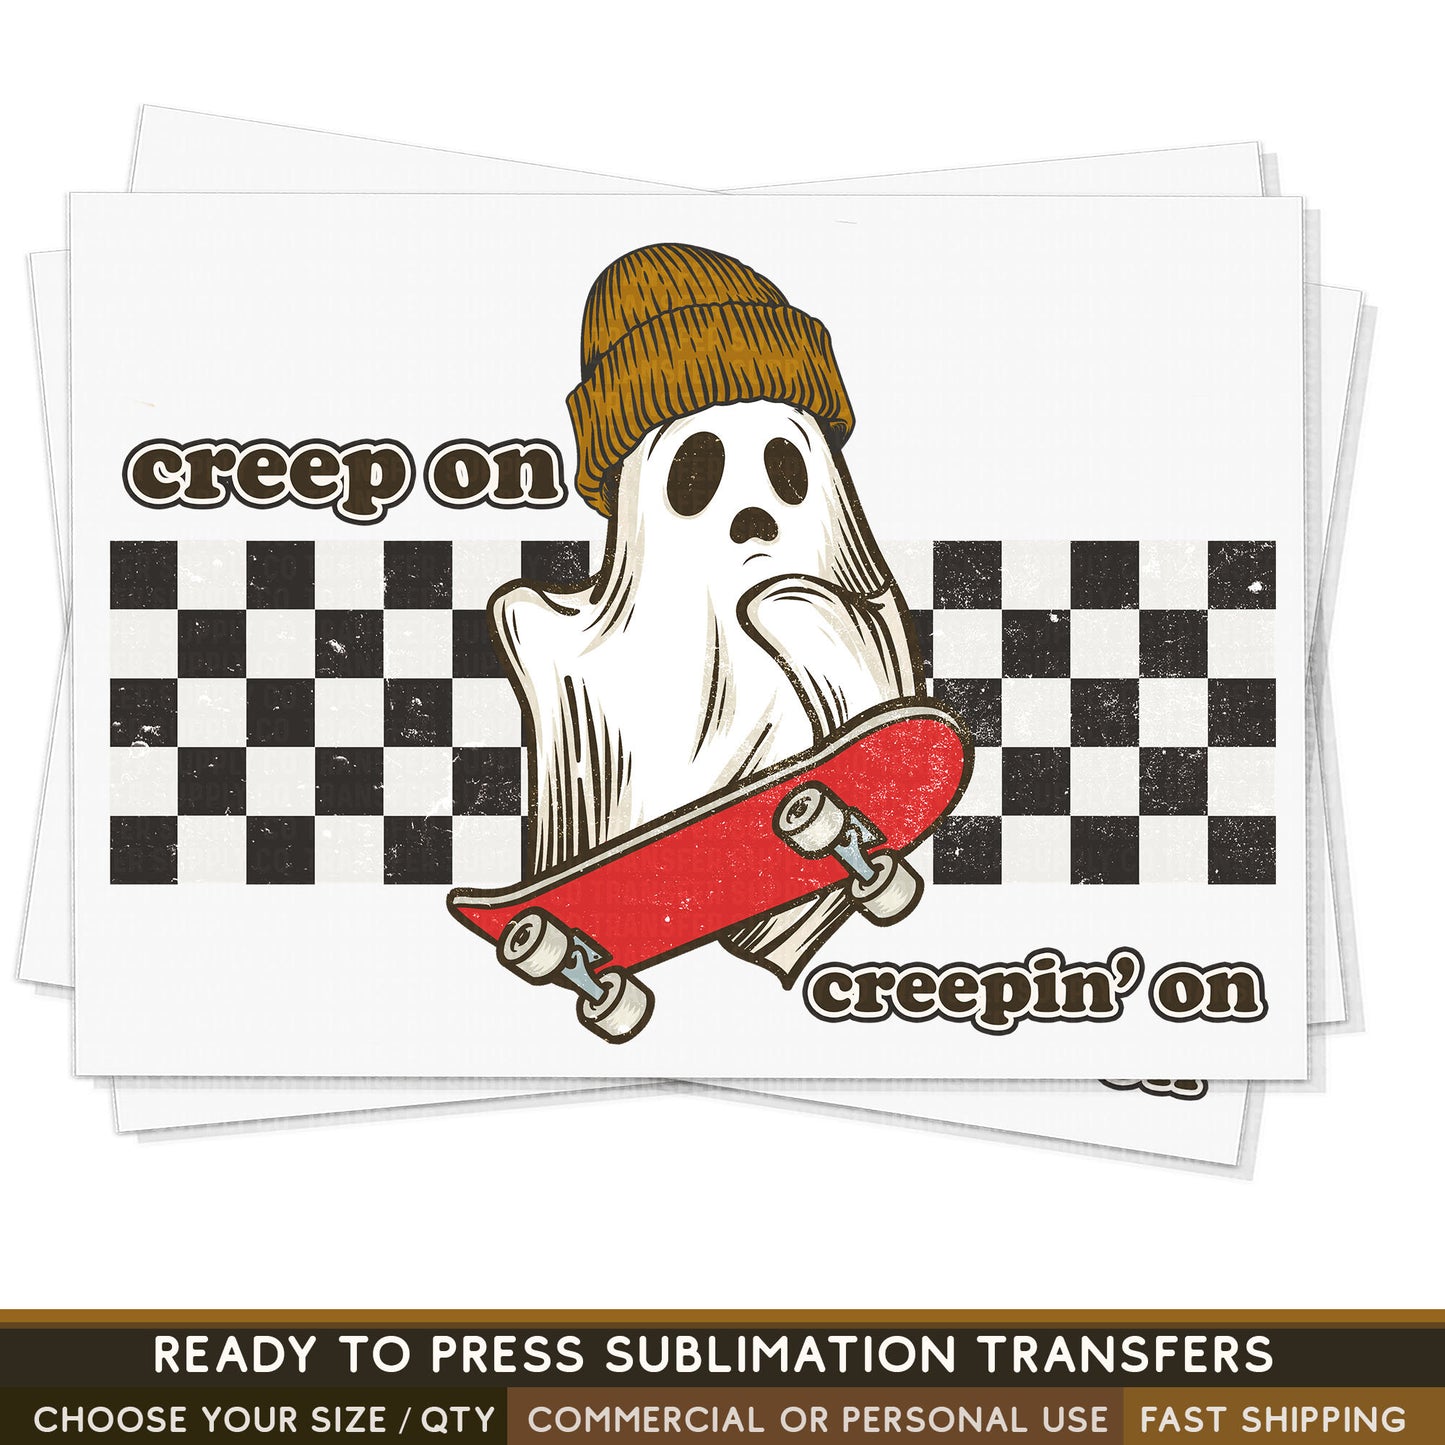 Creep On, Retro Halloween Ghost, Ready To Press Sublimation Transfers, Ready To Press Transfers, Sublimation Prints, Sublimation Transfers